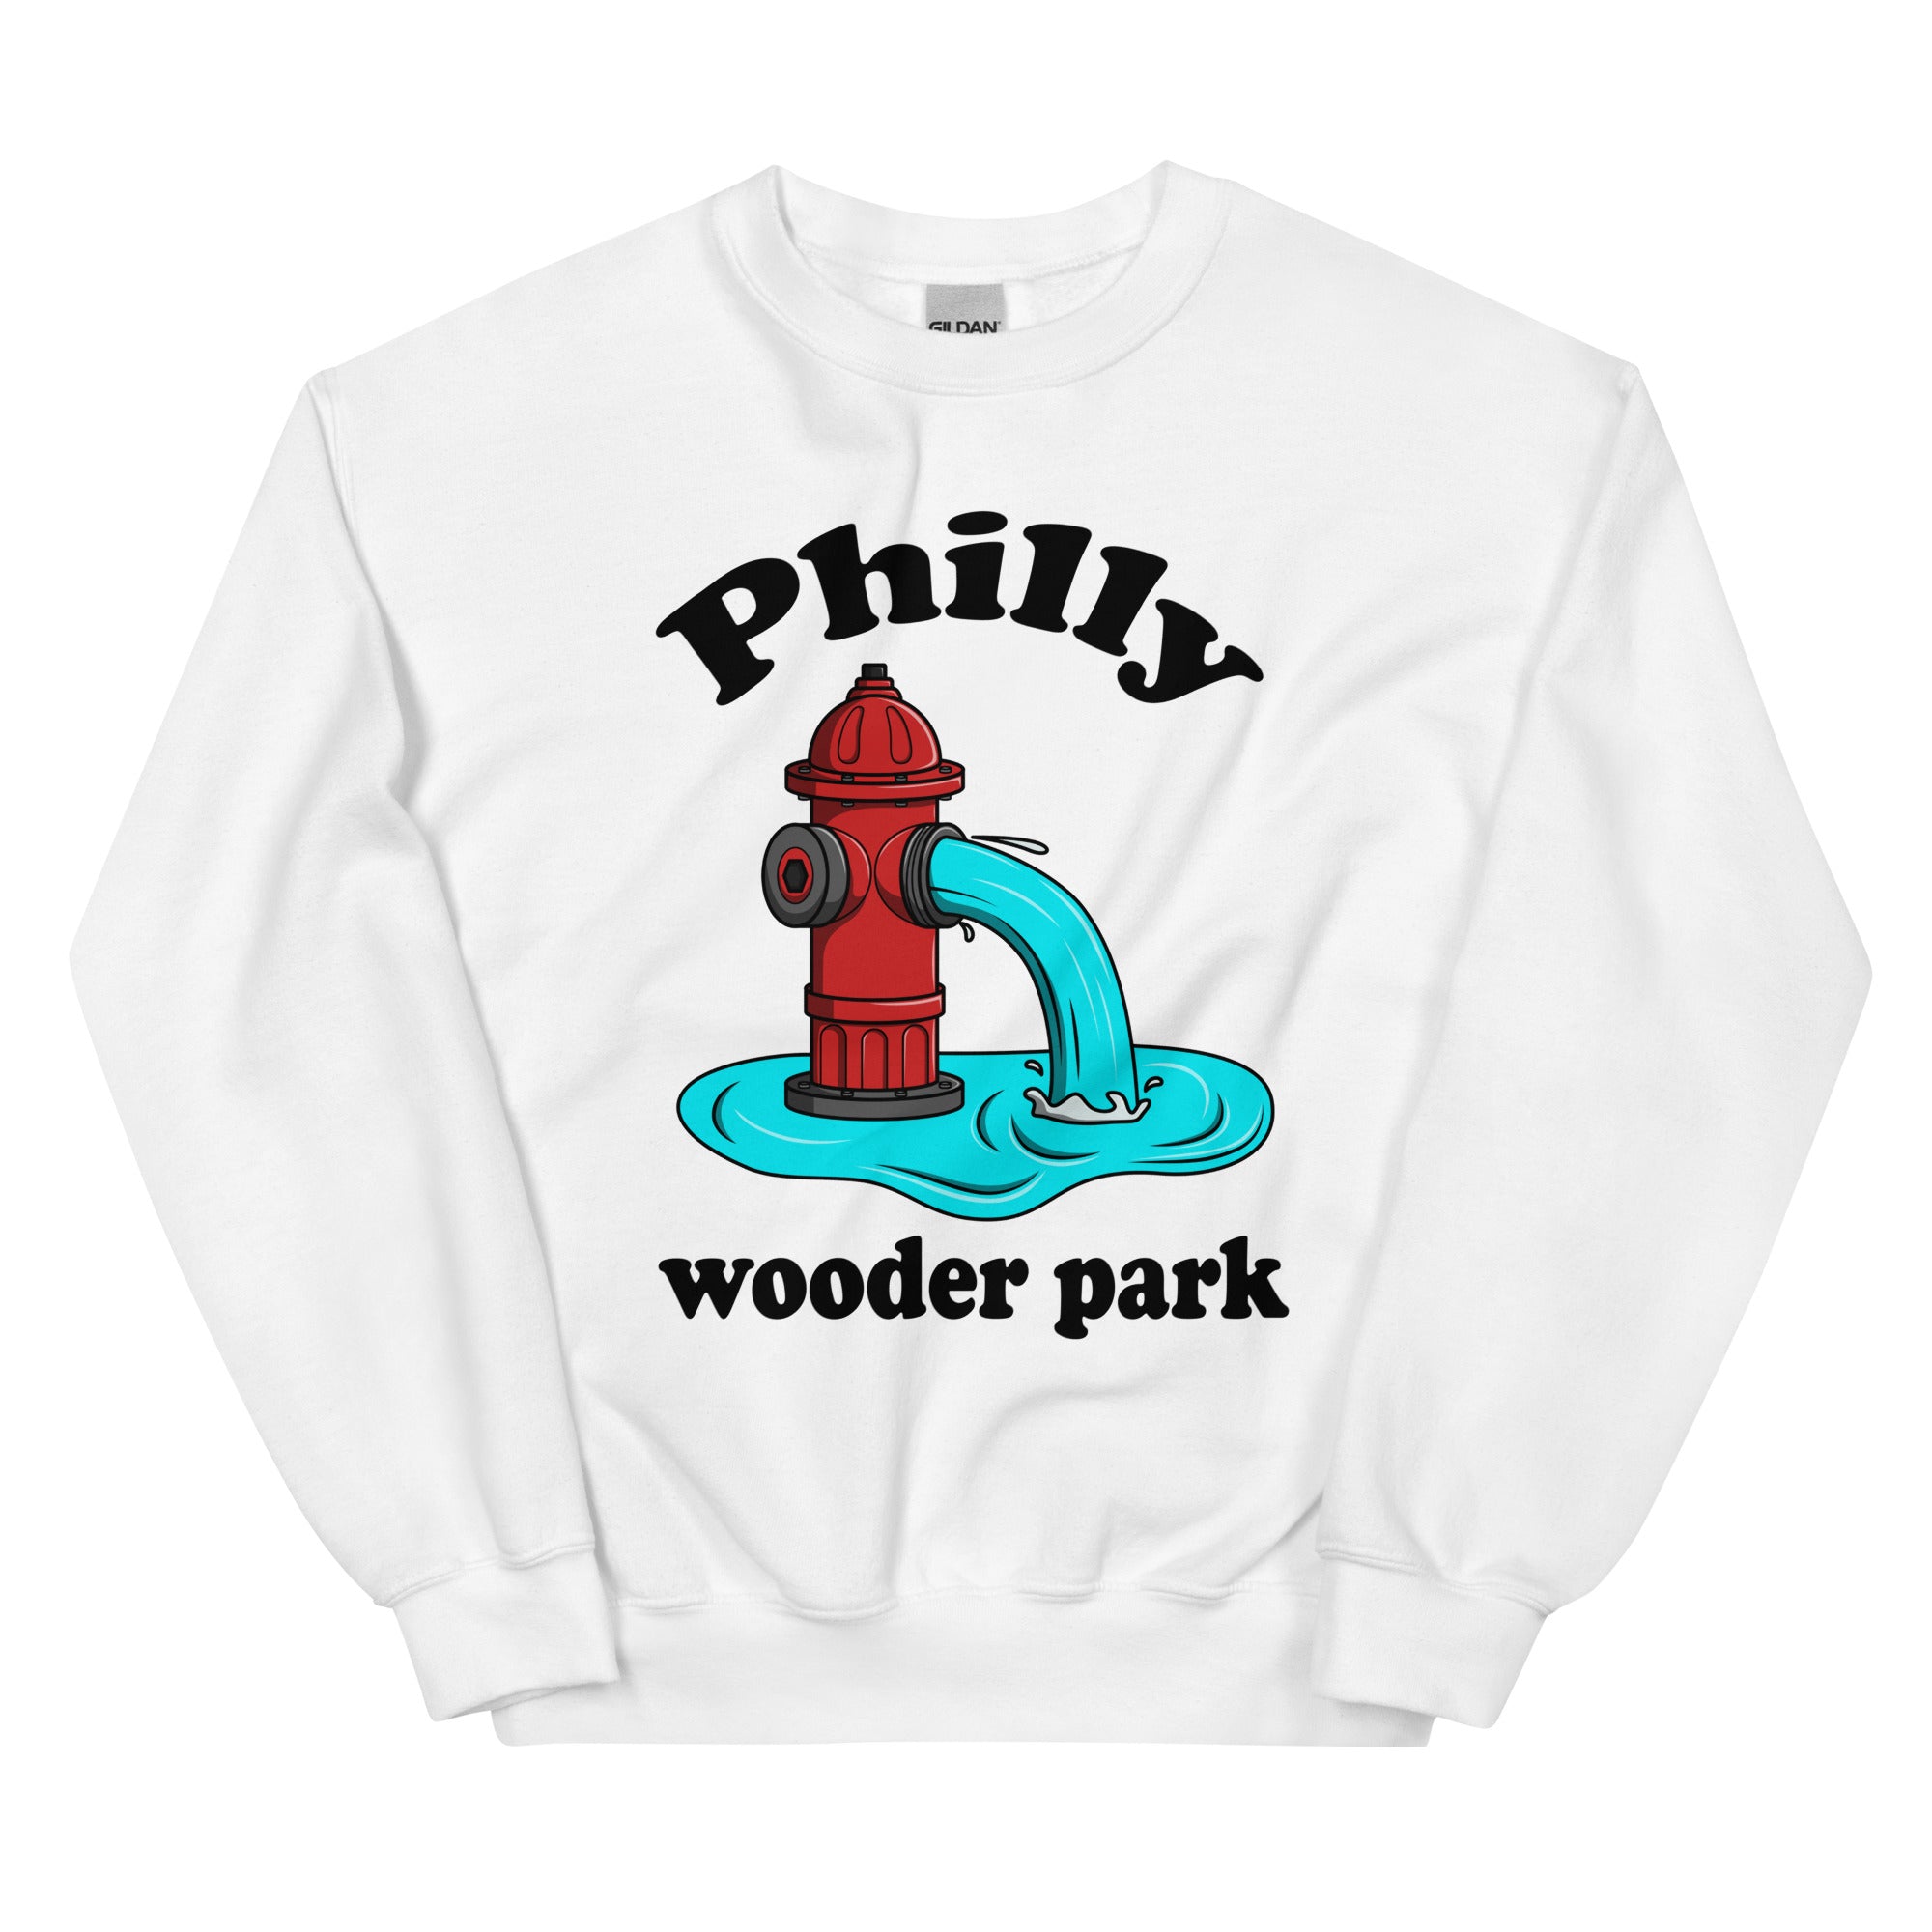 Philadelphia Philly wooder park fire hydrant funny white sweatshirt Phillygoat